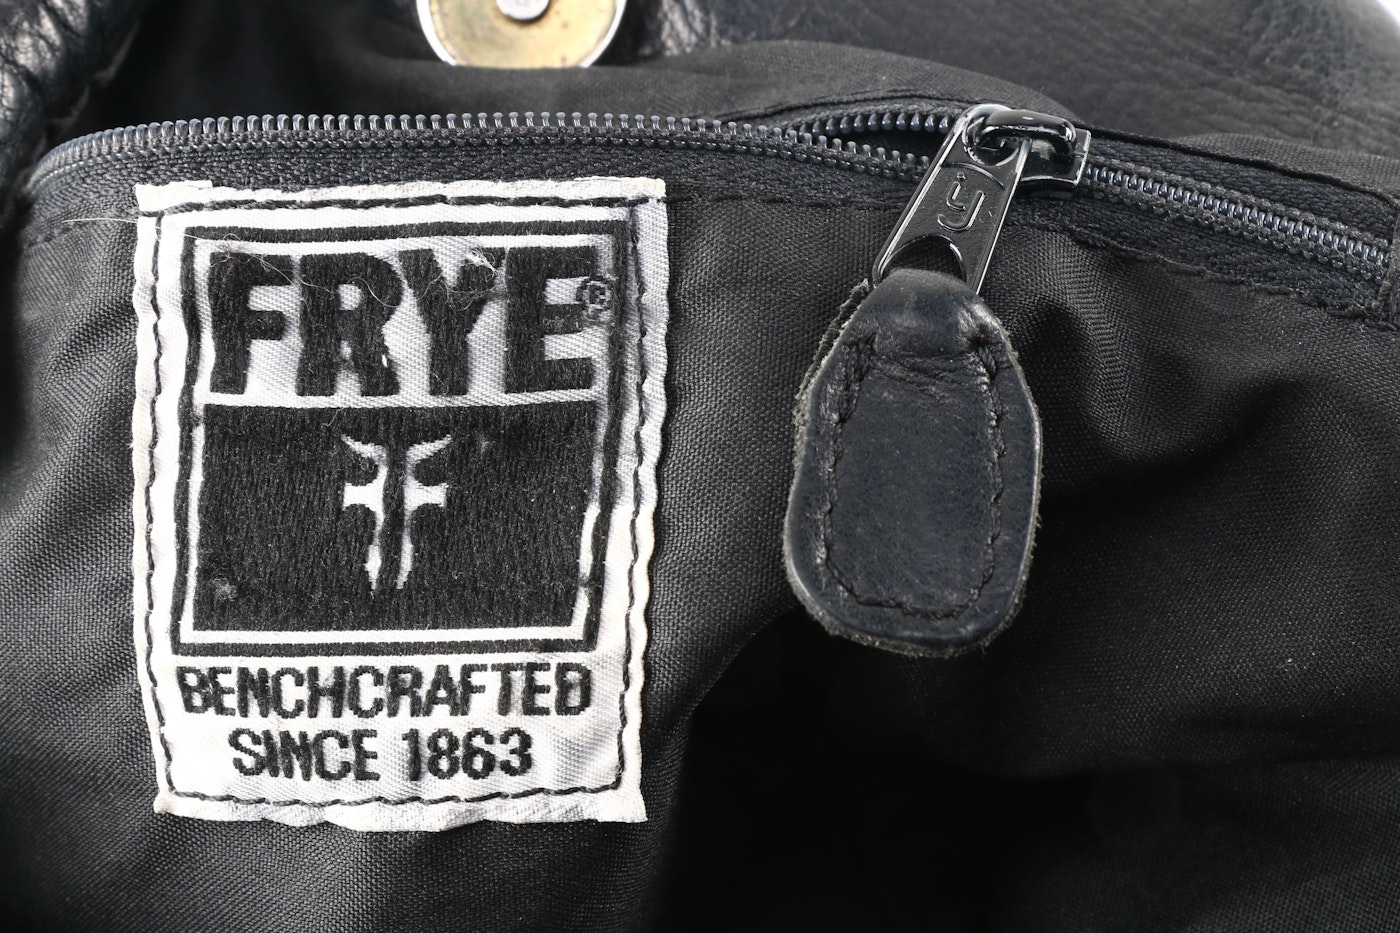 Frye, DKNY and J.Jill Leather Handbags | EBTH